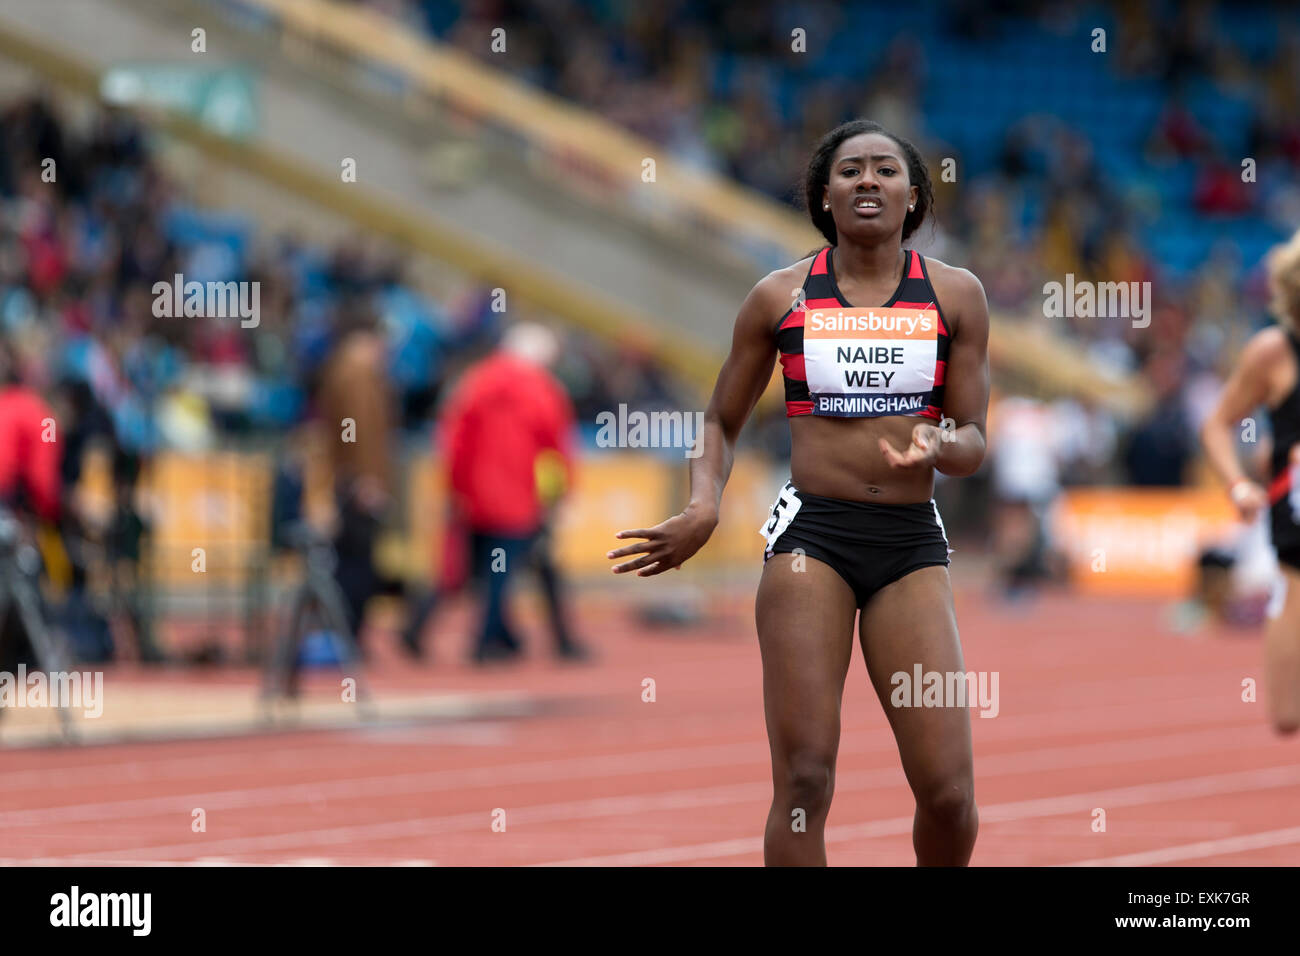 Aisha NAIBE-WEY Women's 400m Hurdles Heat 4, 2014 Sainsbury's